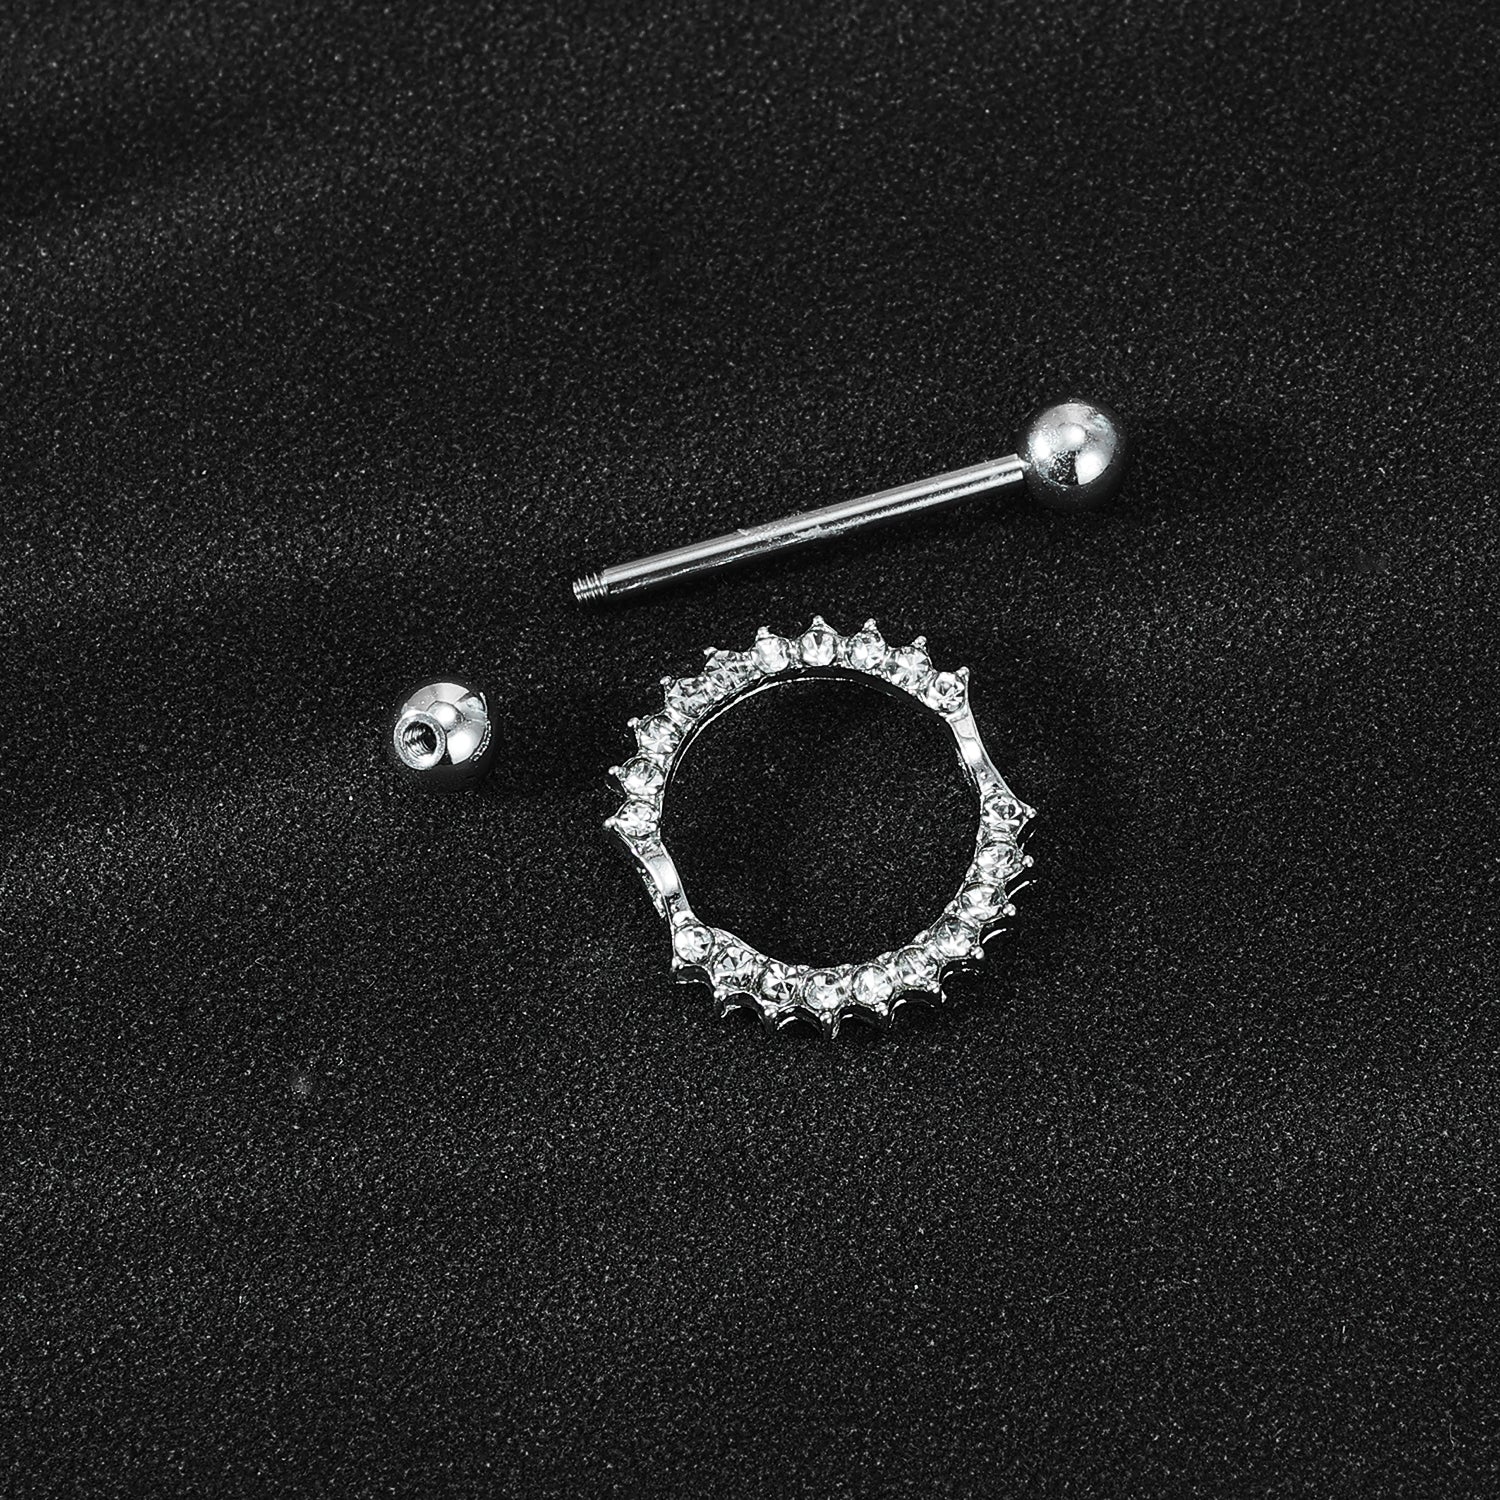 2Pcs 14G Stainless Steel Nipple Rings Bling Crystal Nipple Piercing Barbell Jewelry